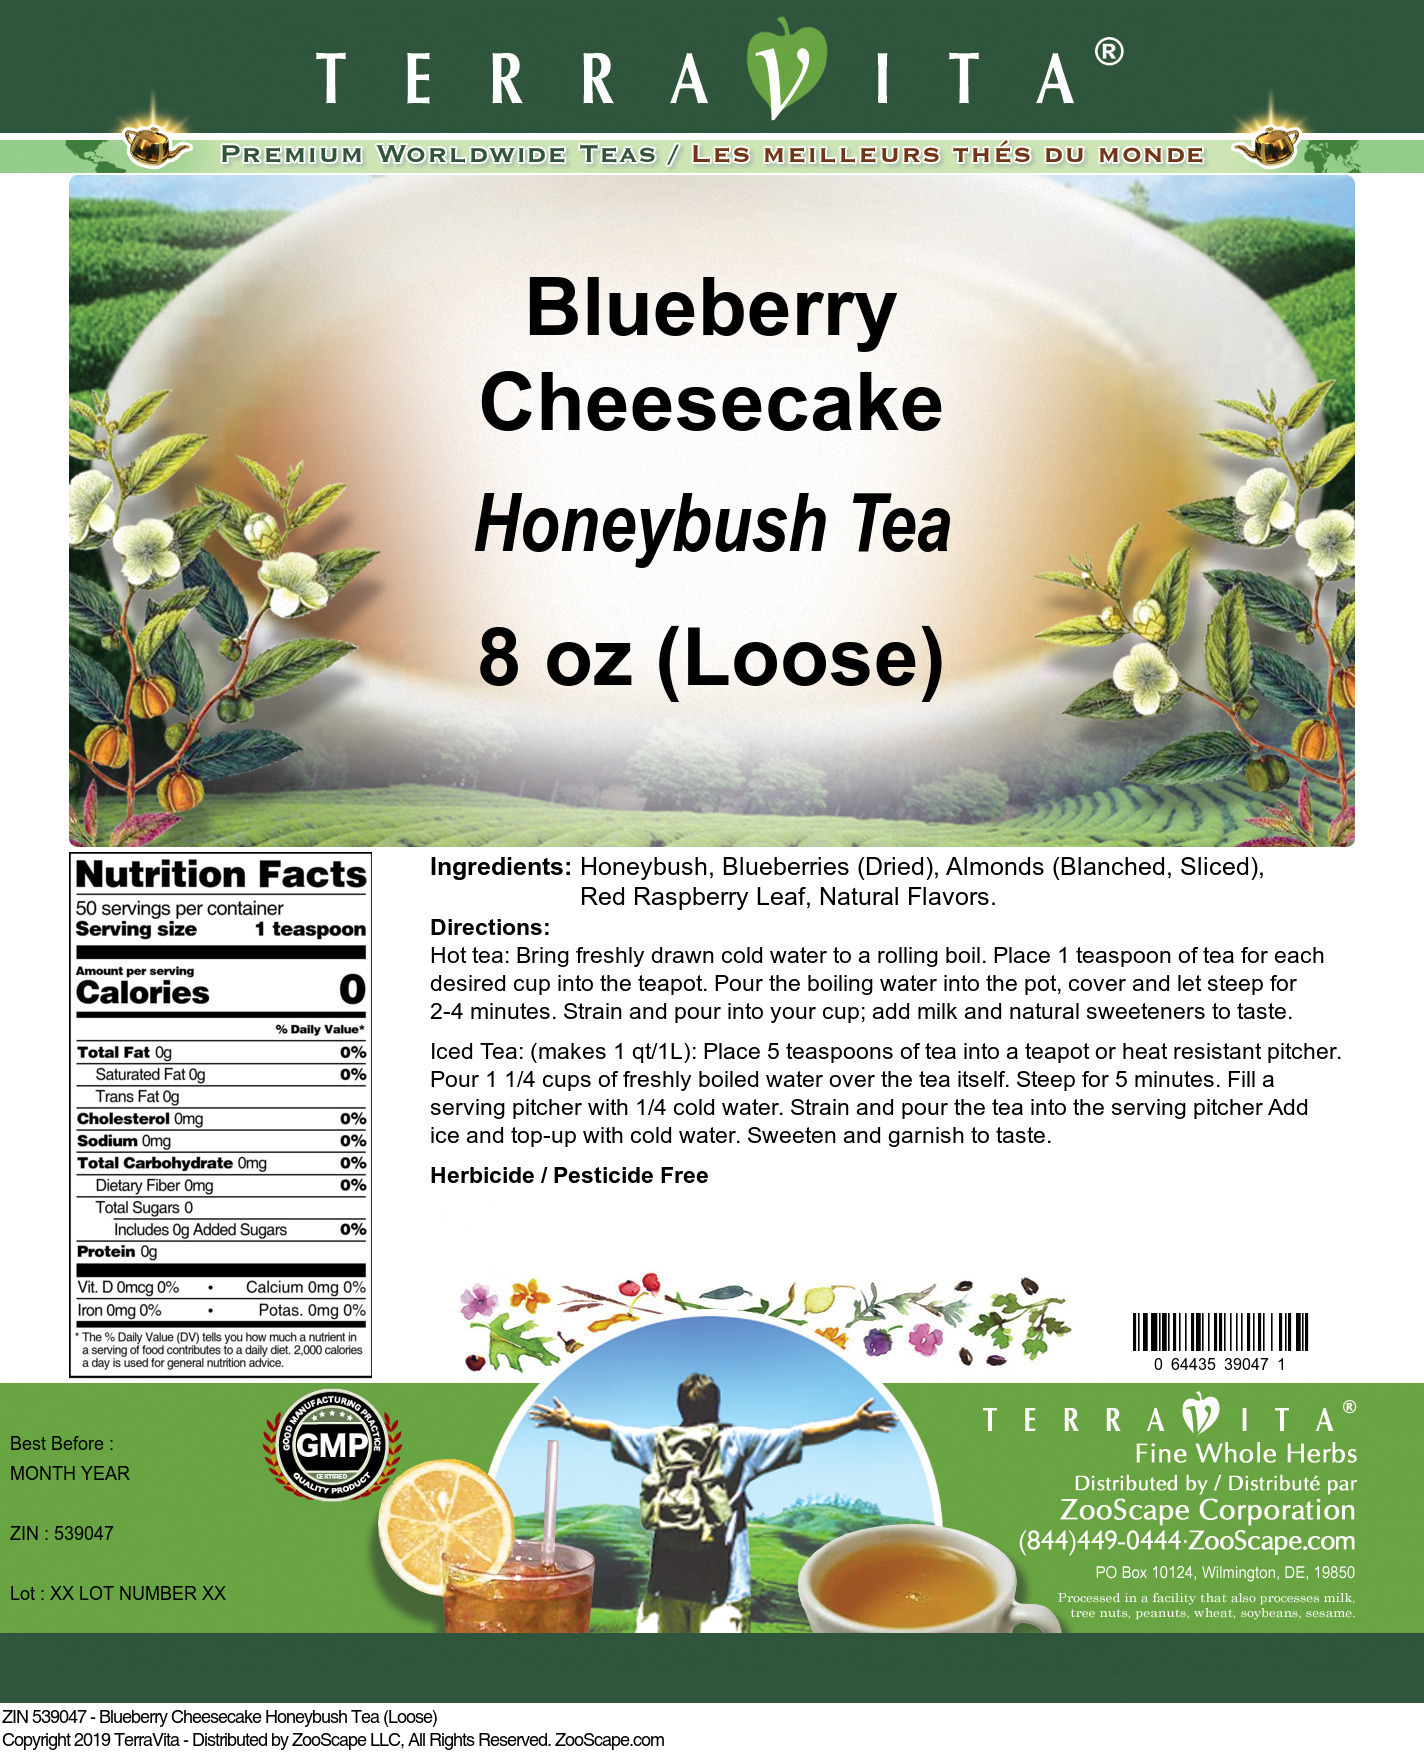 Blueberry Cheesecake Honeybush Tea (Loose) - Label